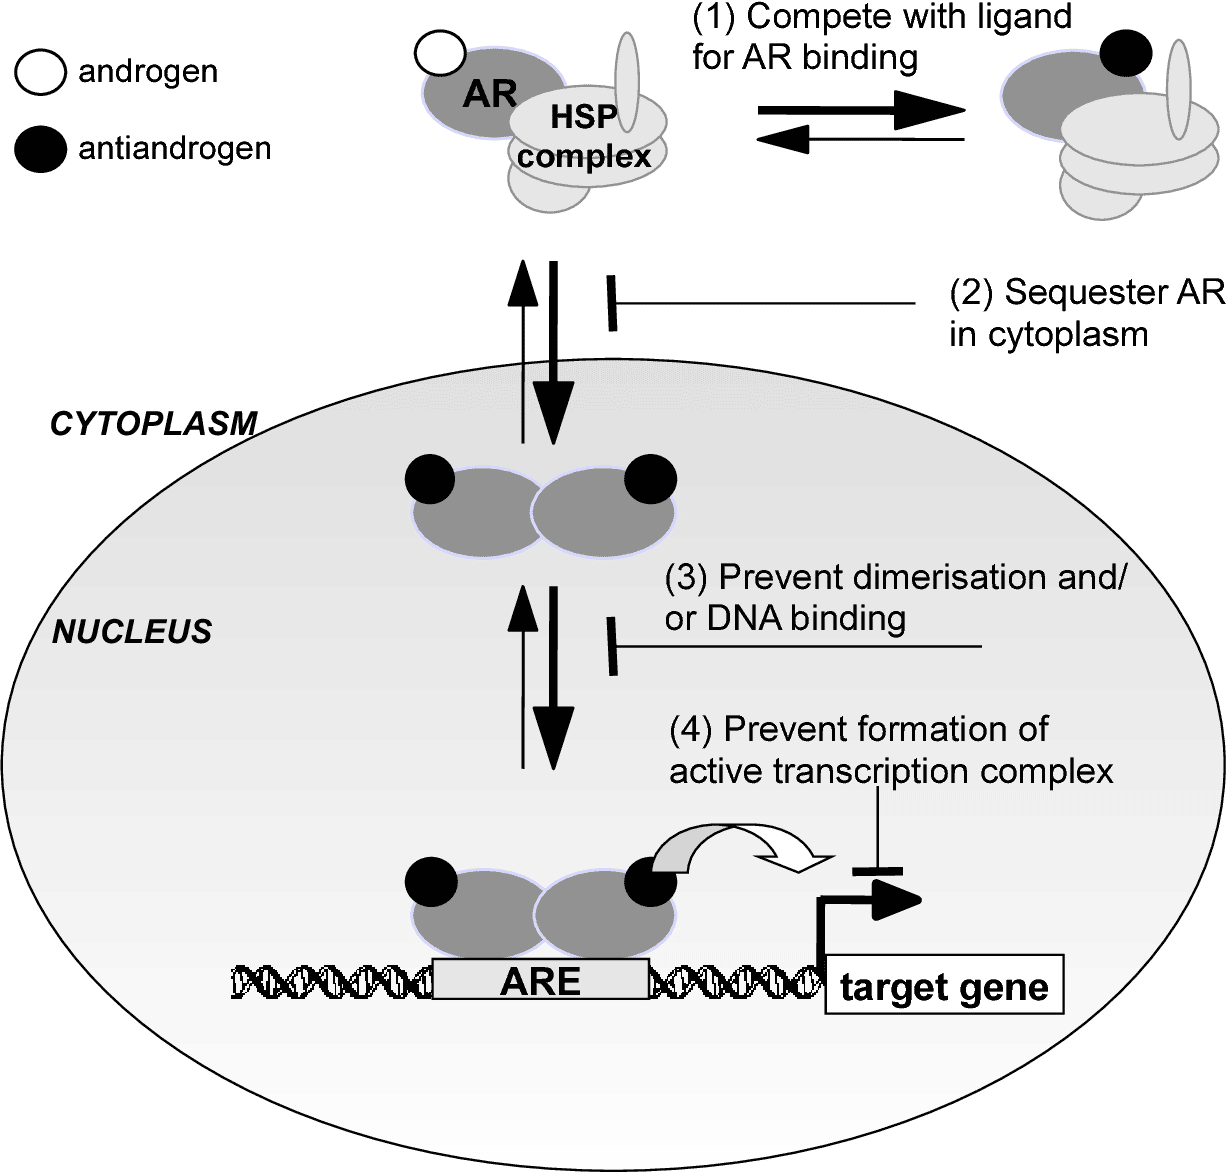 [PDF] Mechanisms of androgen receptor repression in prostate cancer ...